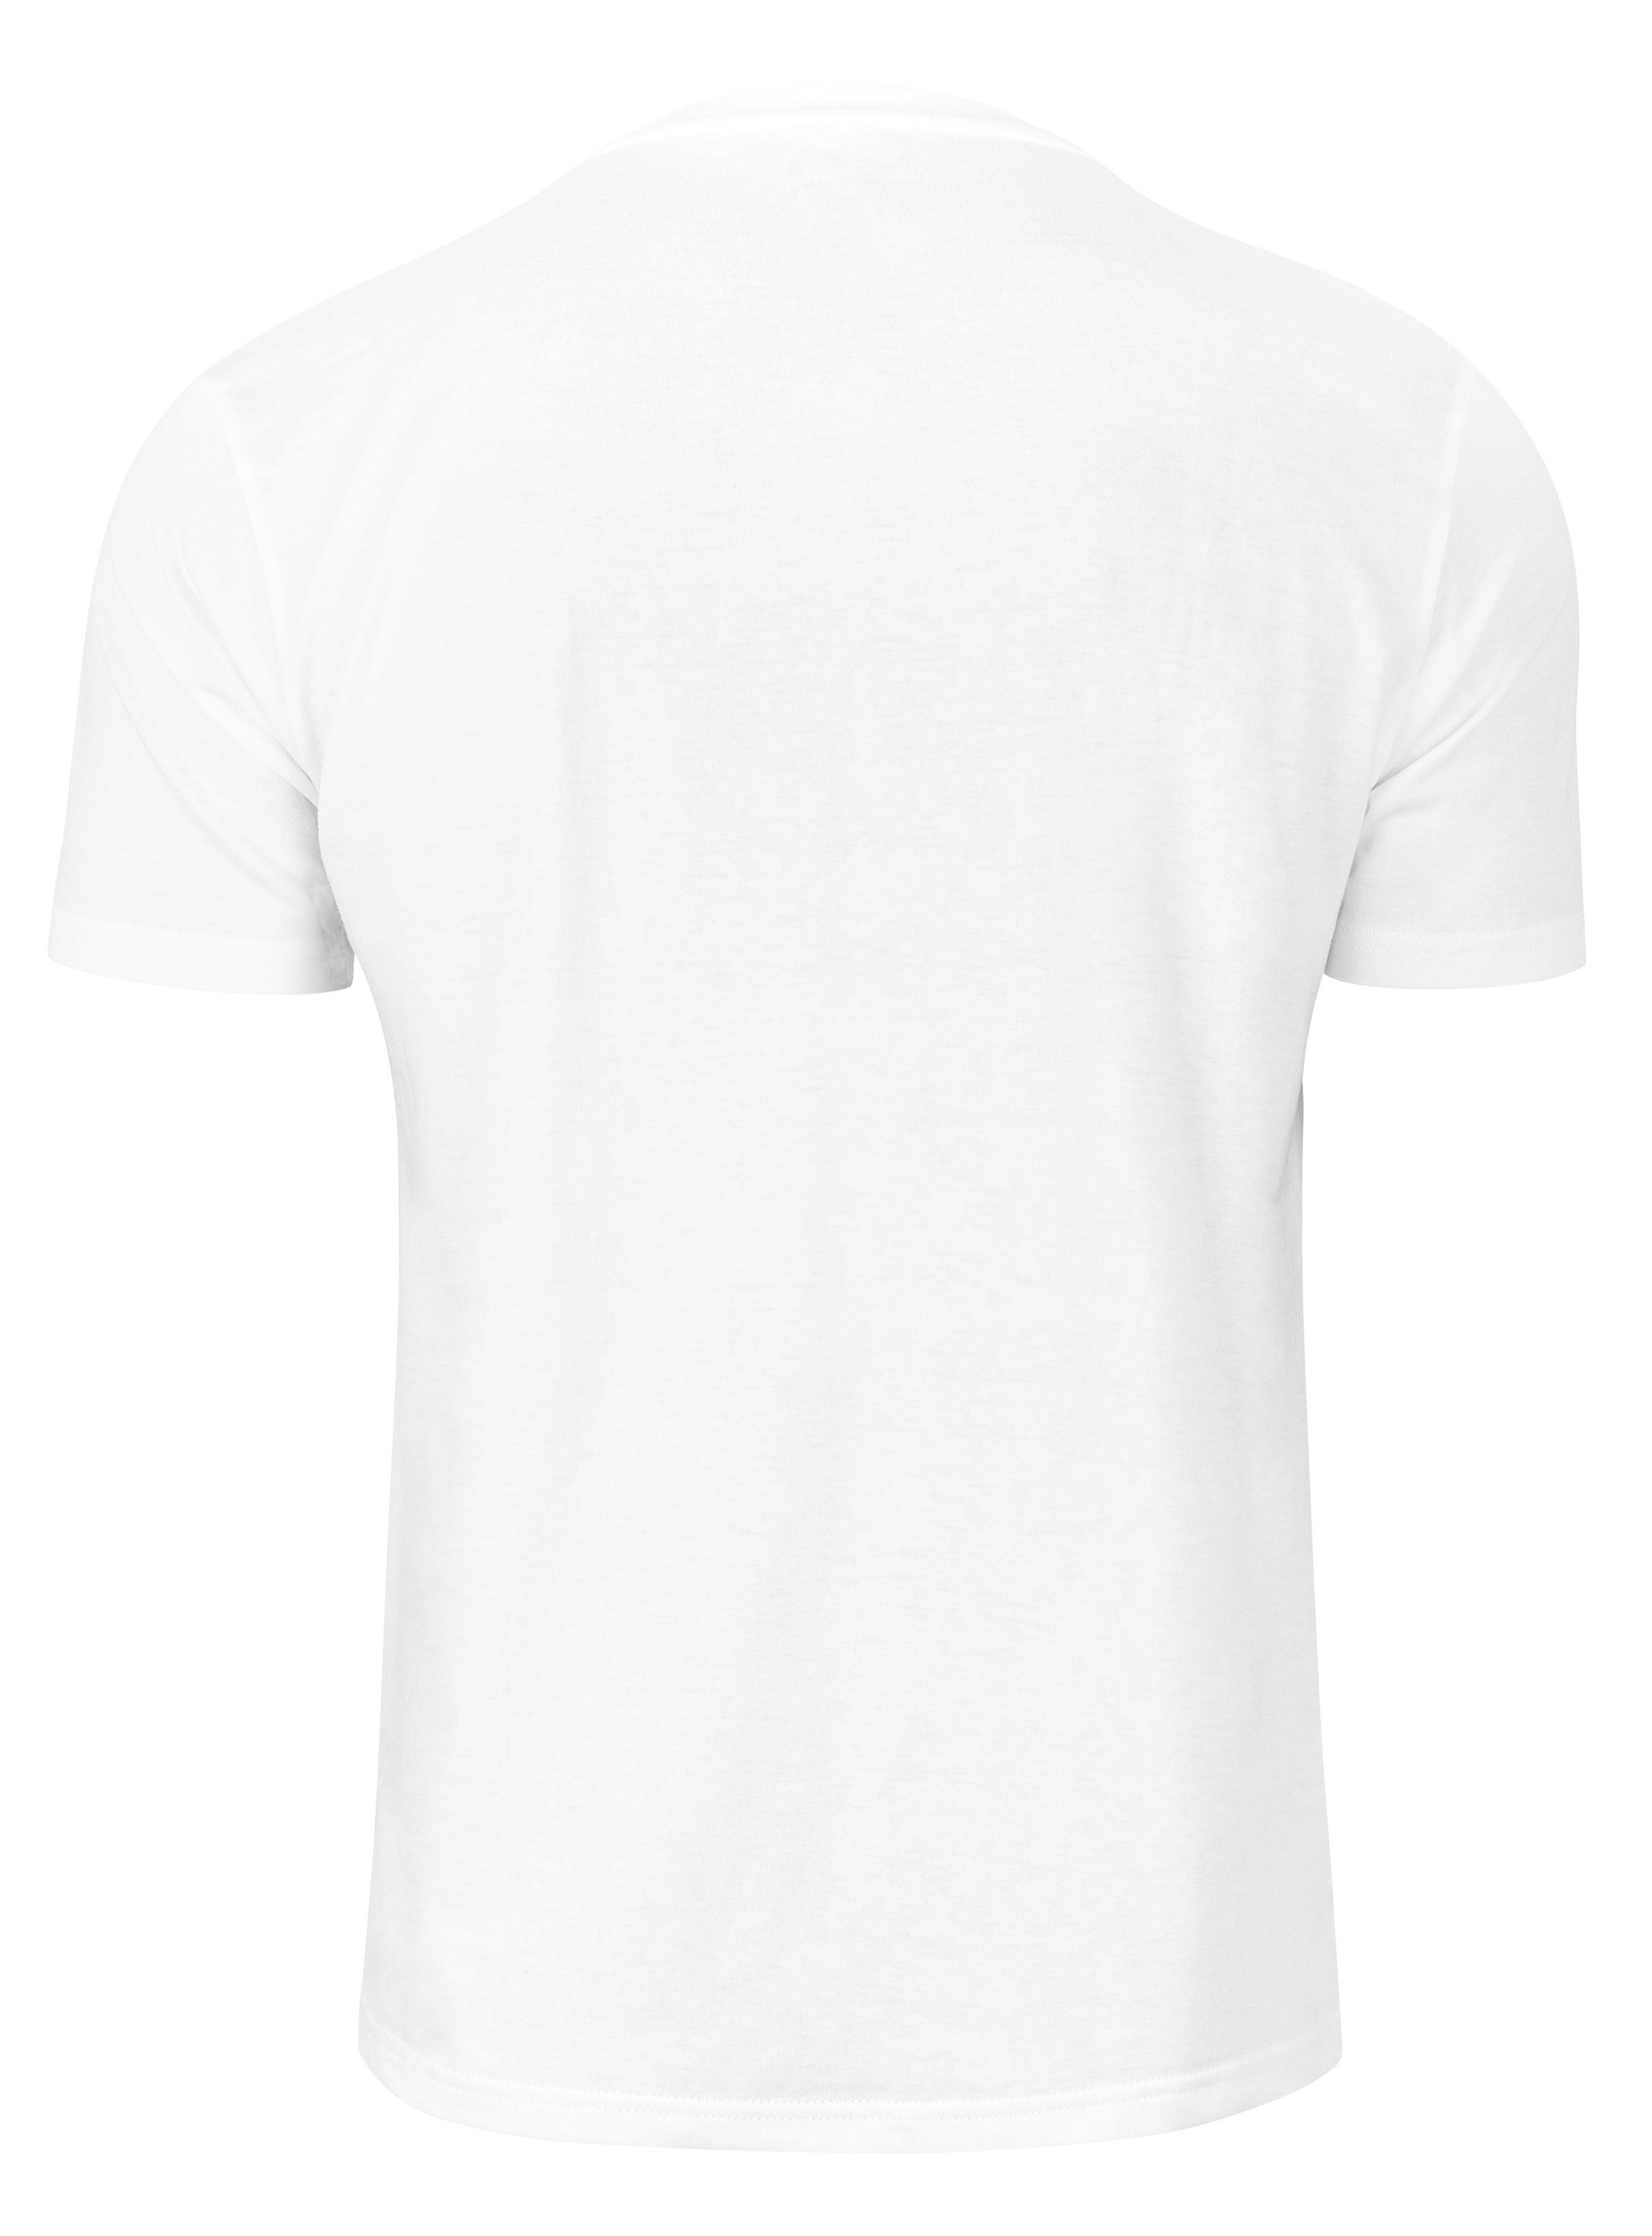 weiss Opa T-Shirt der Cotton Prime® Legende Enkel